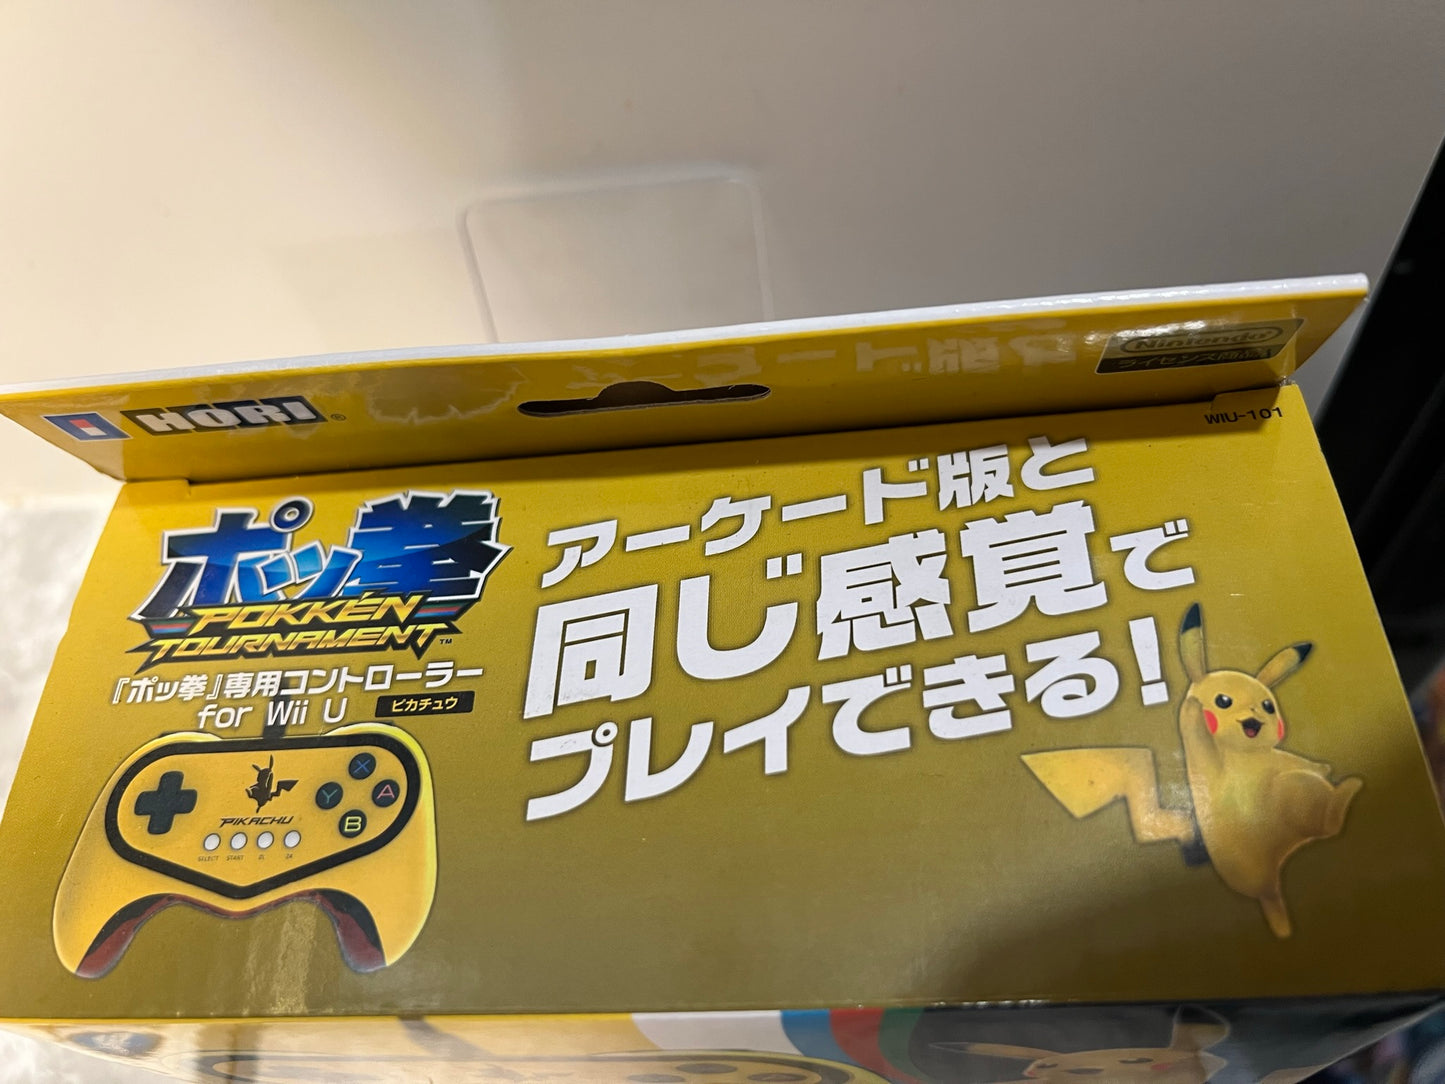 Hori Pokken Tournament Pro Pad Pikachu Nintendo Wii U Yellow Controller